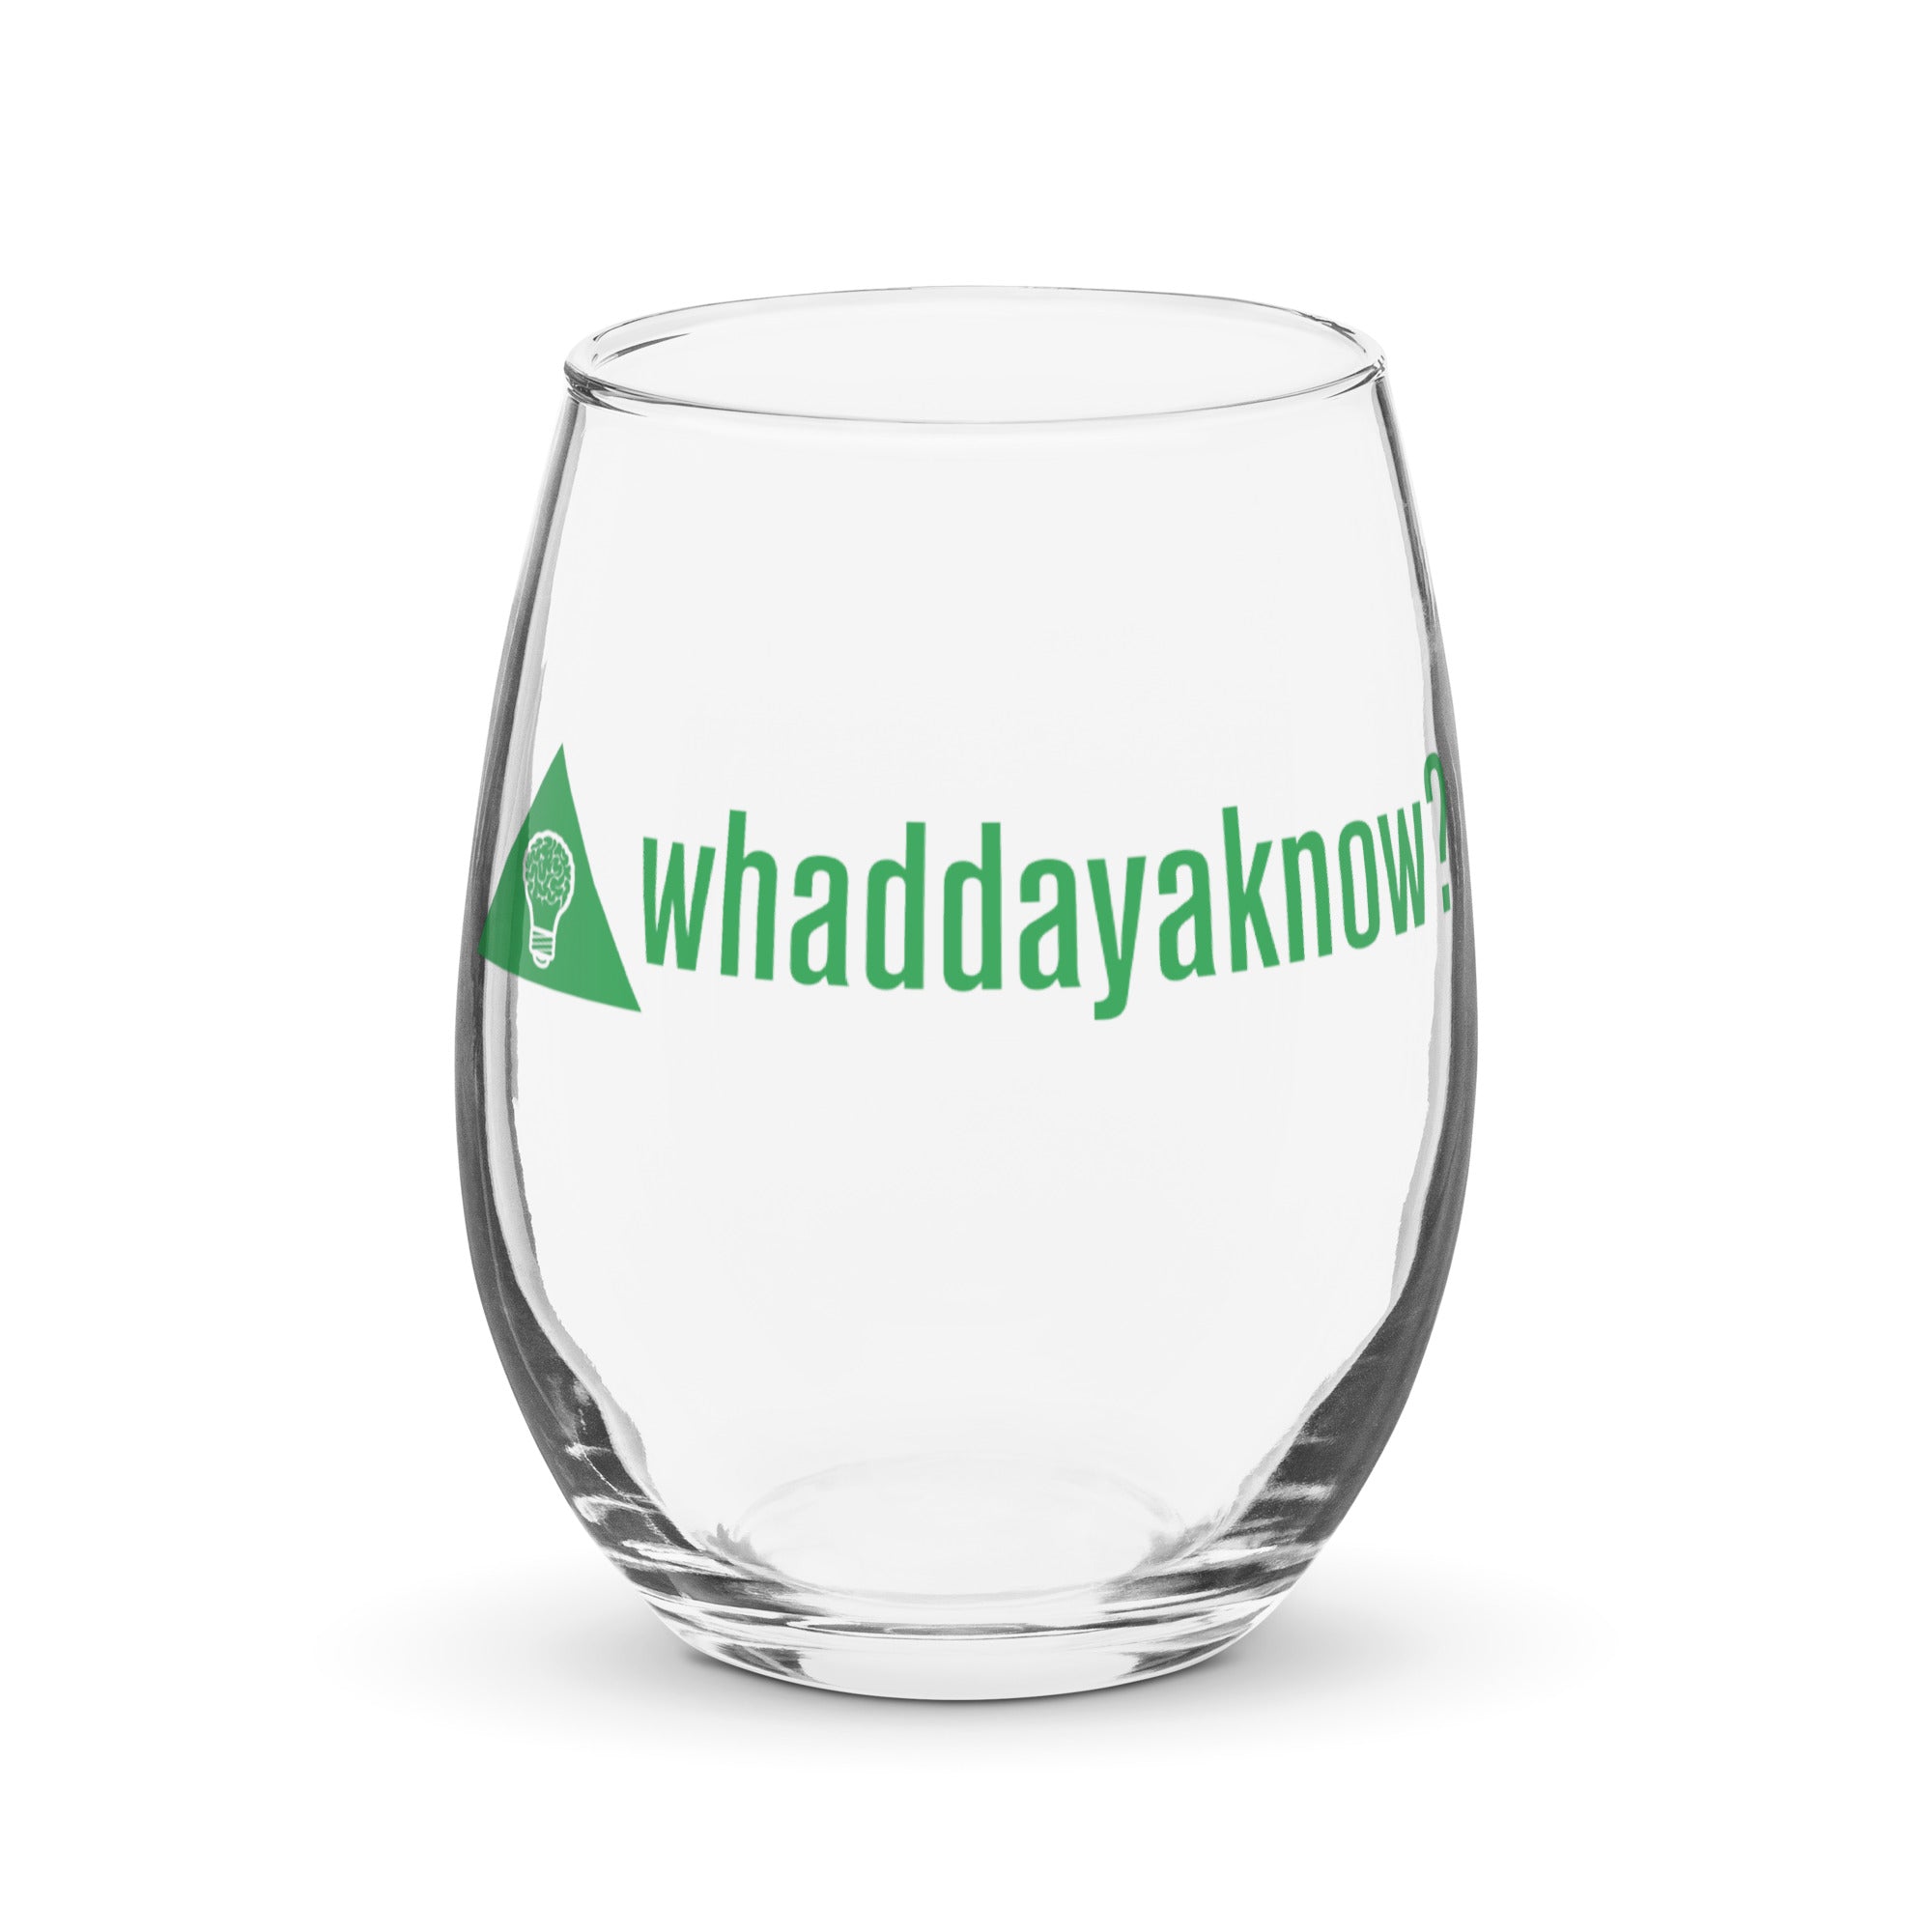 Whaddayaknow? Cheers to Trivia - Stemless Wine Glass